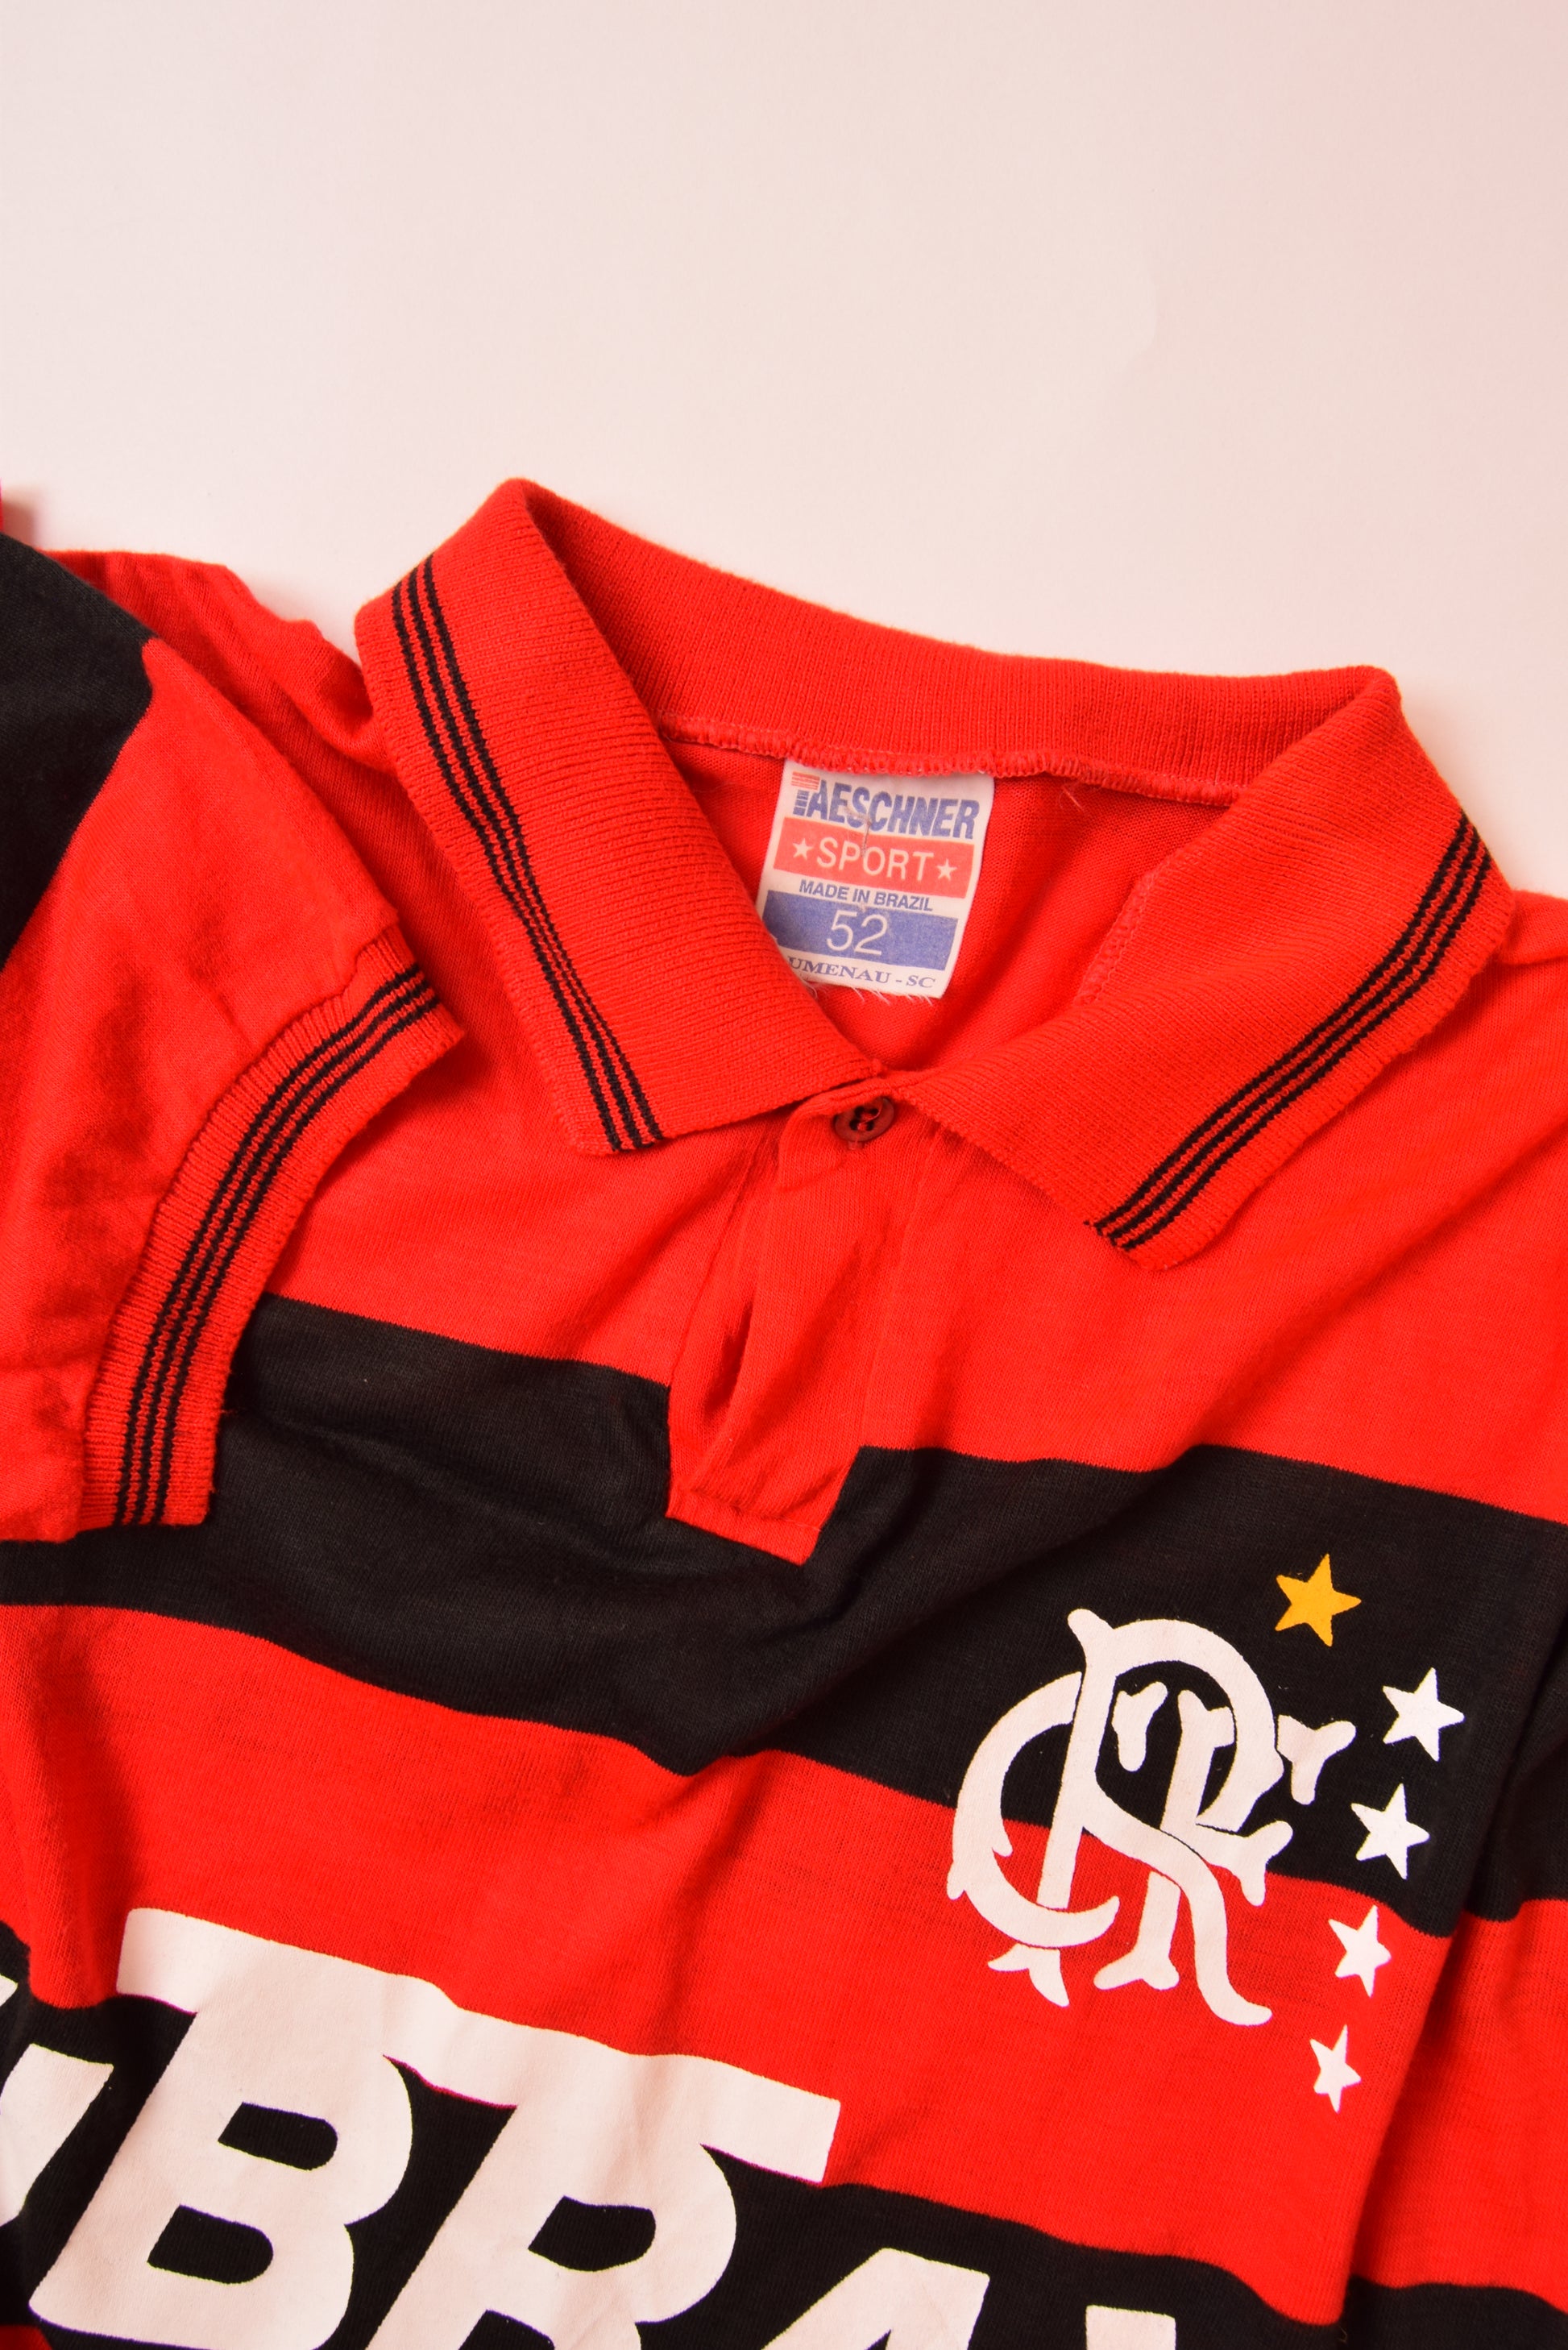 Flamengo Football Shirt Taeschner #10 Made in Brazil Size L